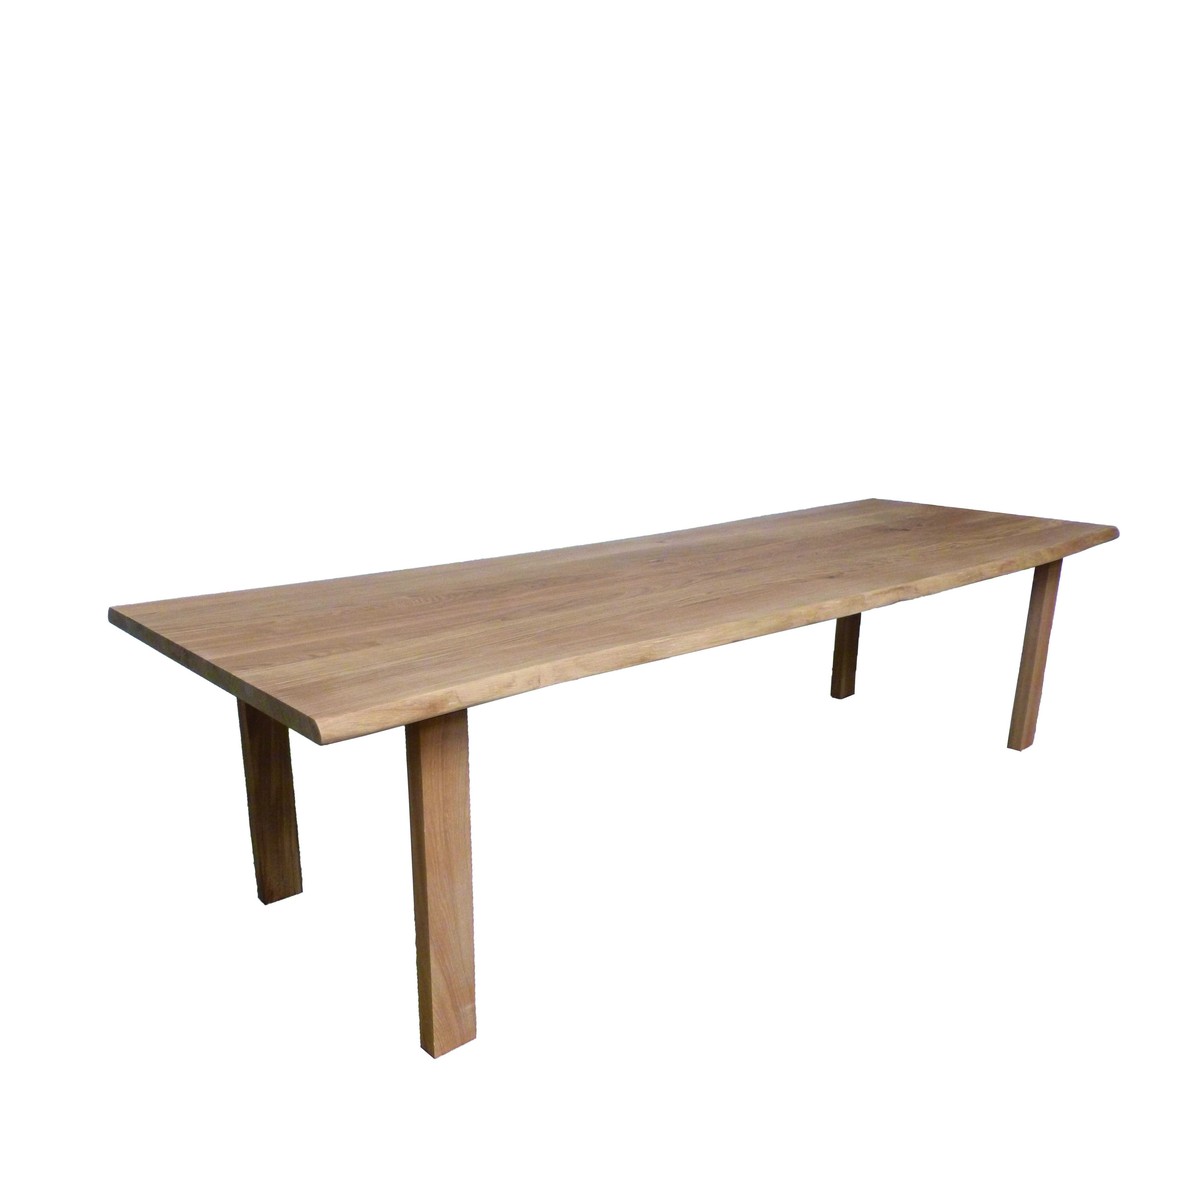   Table Dune Trunk rectangulaire  160x100x77cm